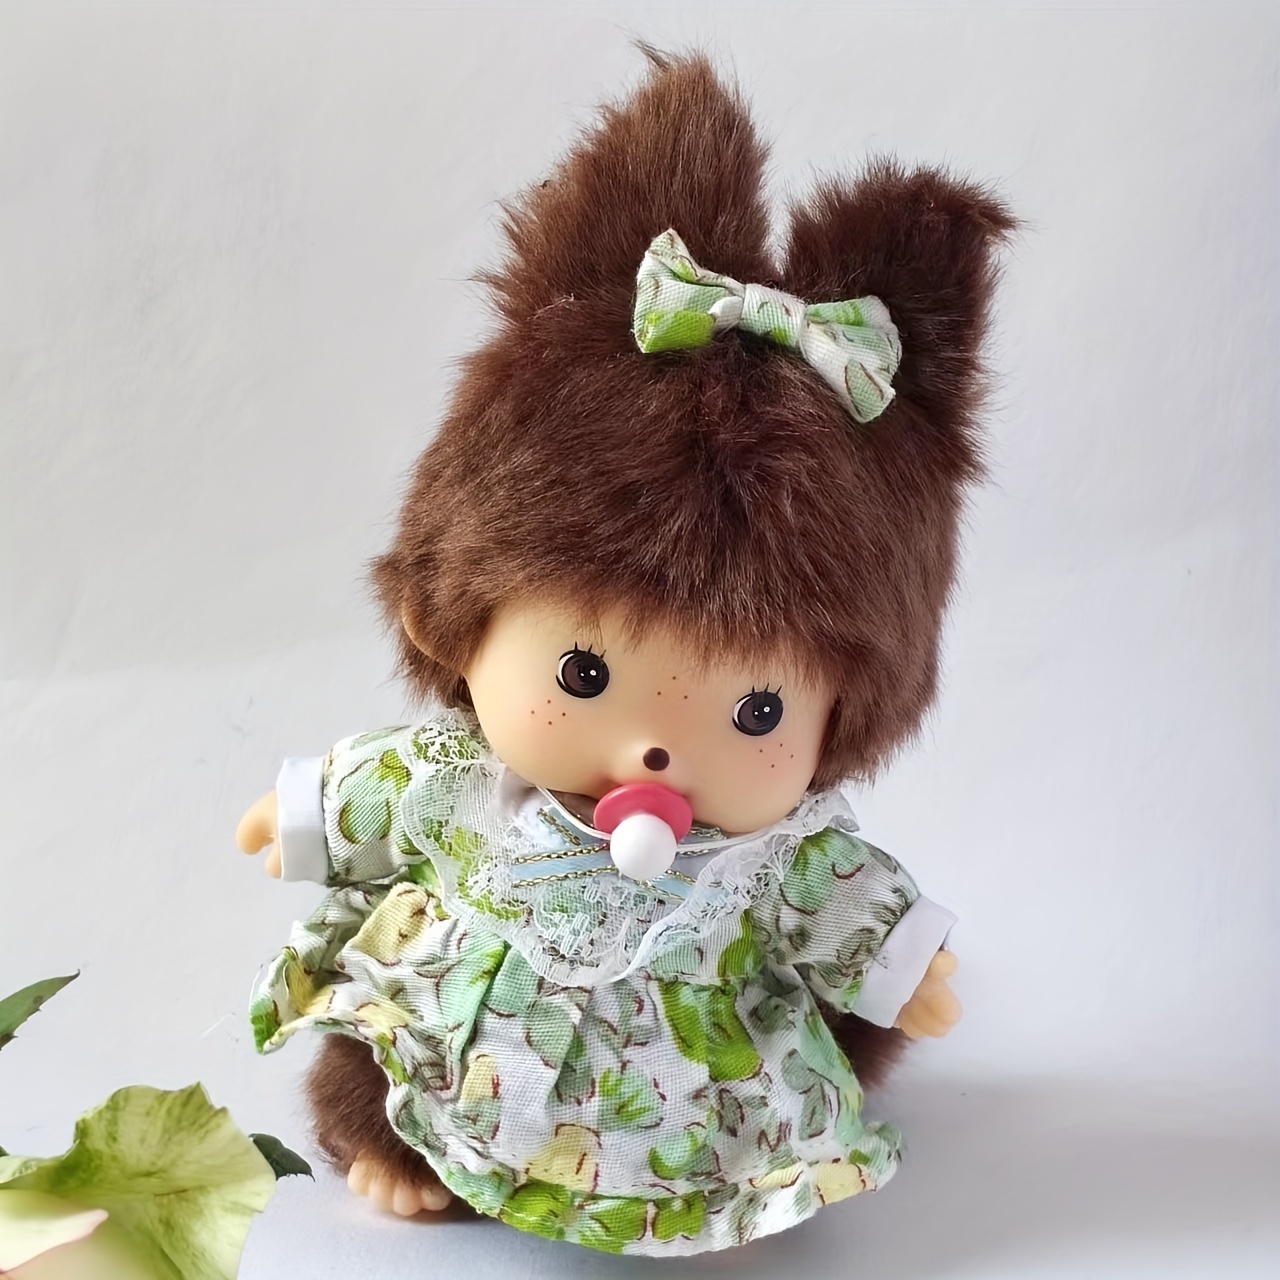 Sunny Doll Schlüsselanhänger Handgefertigter Häkelanhänger Mädchen Samt  Faden Gewebter Schmuck Handgefertigte Puppen-Tasche Zum Aufhängen Fertiges